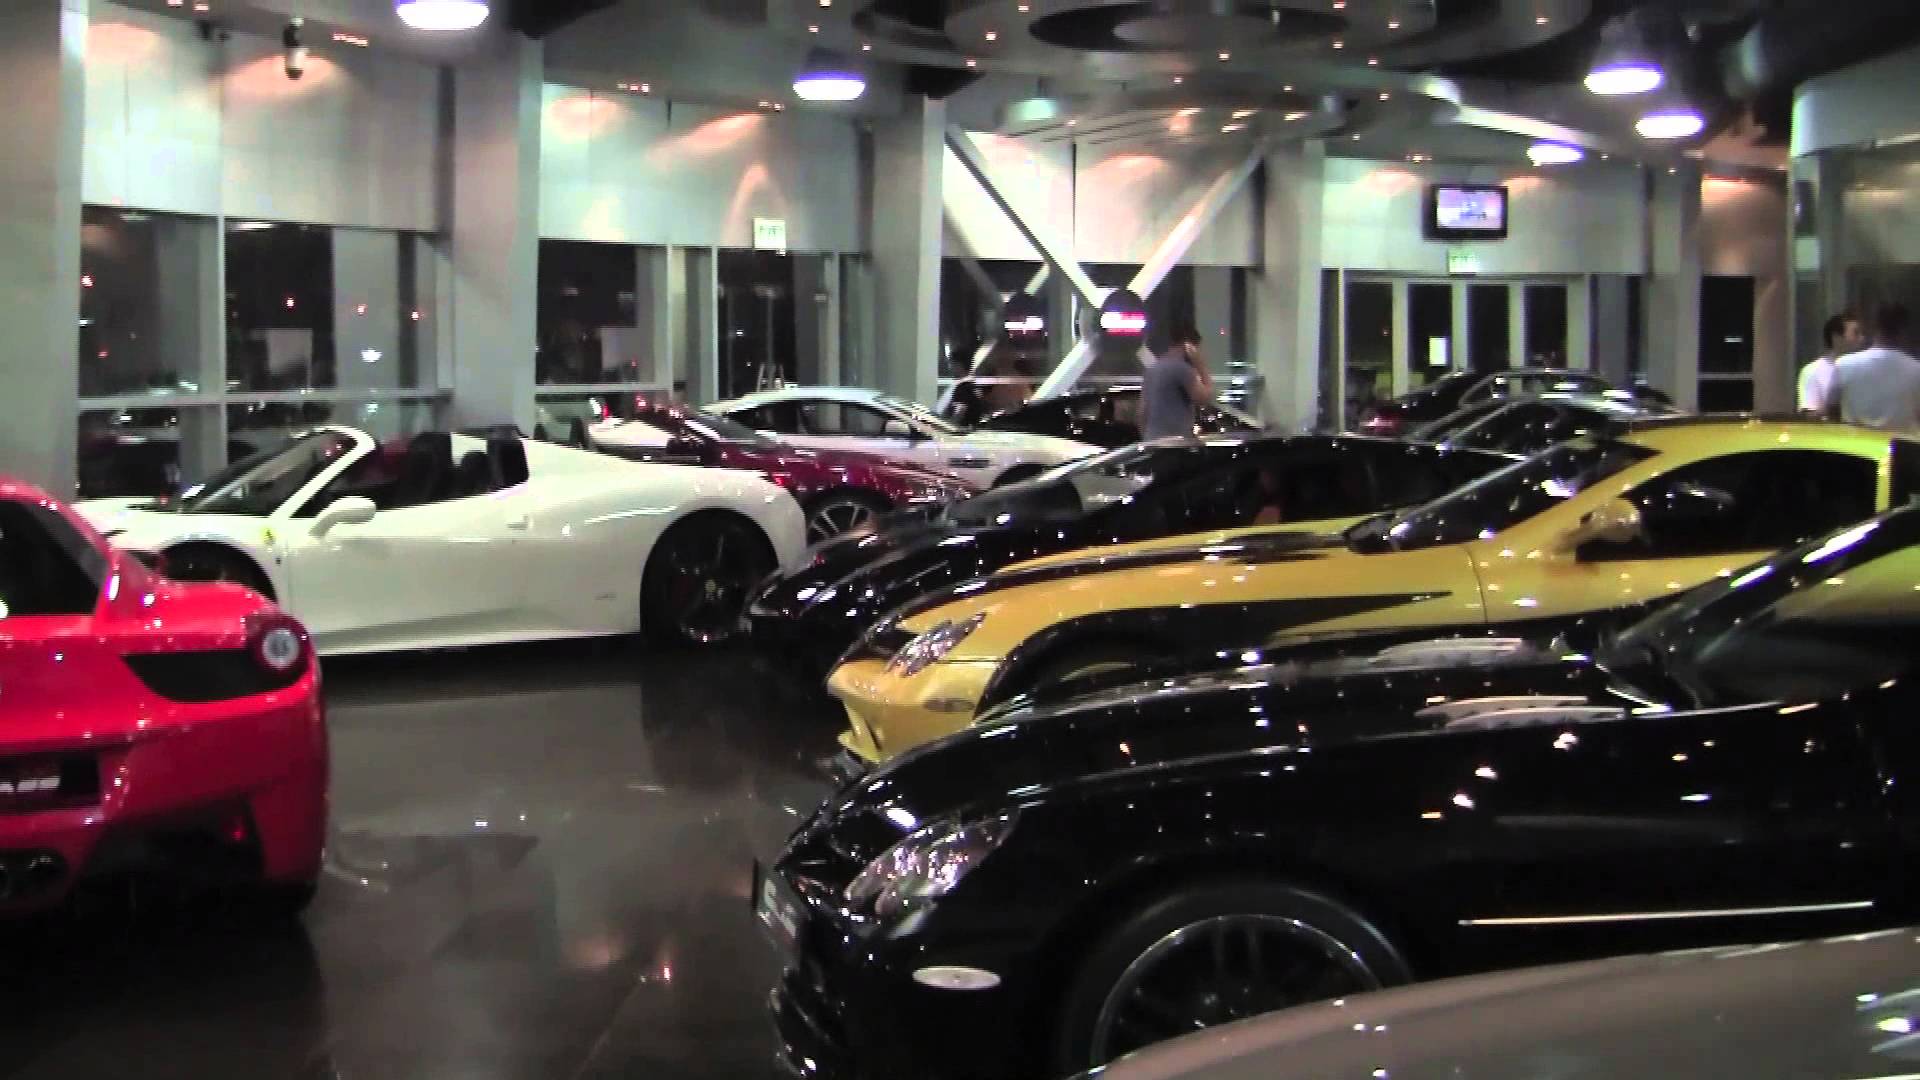 Dubai Supercar Showroom - Which one would you choose? - YouTube